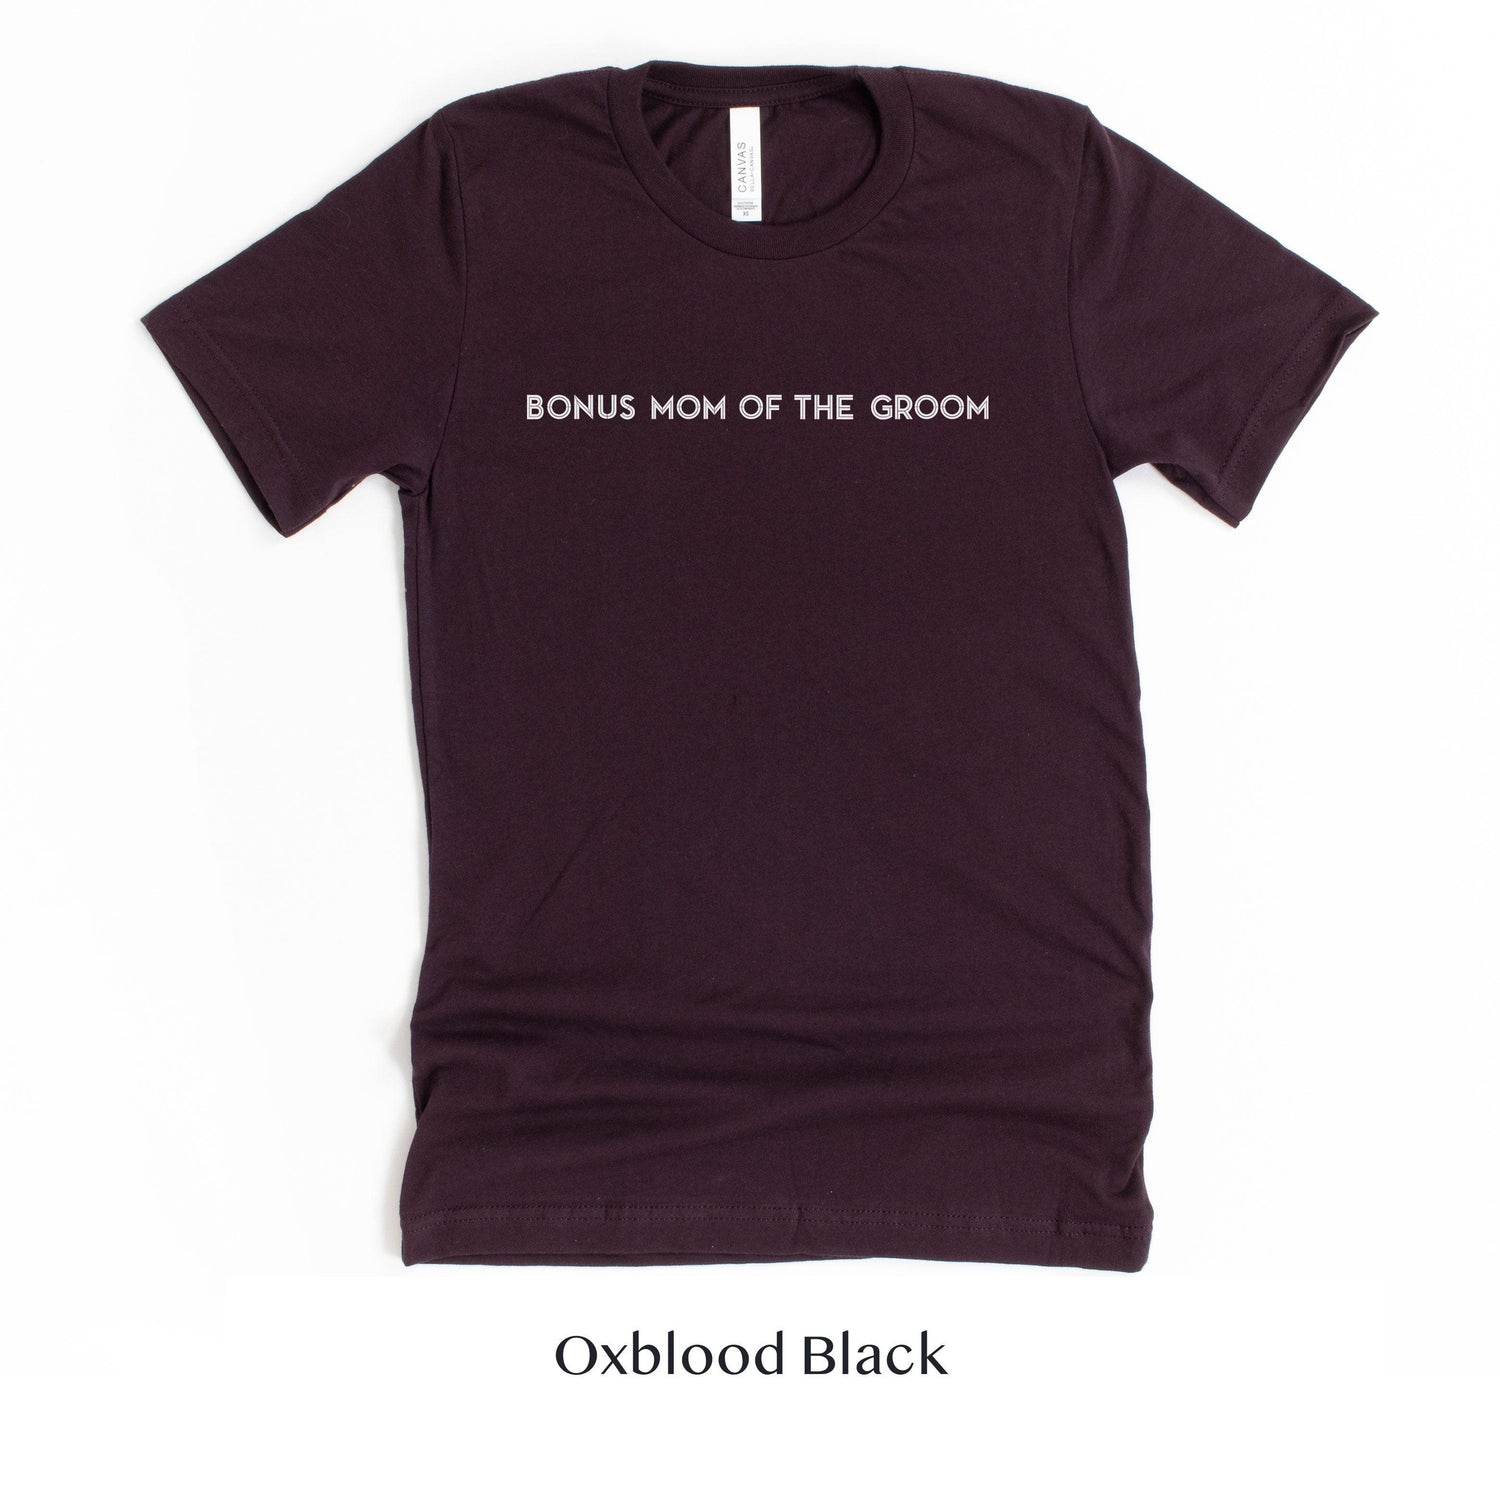 Bonus Mom of the Groom Shirt - Matching Wedding Party tshirts - Unisex t-shirt by Oaklynn Lane - Oxblood Maroon Tee